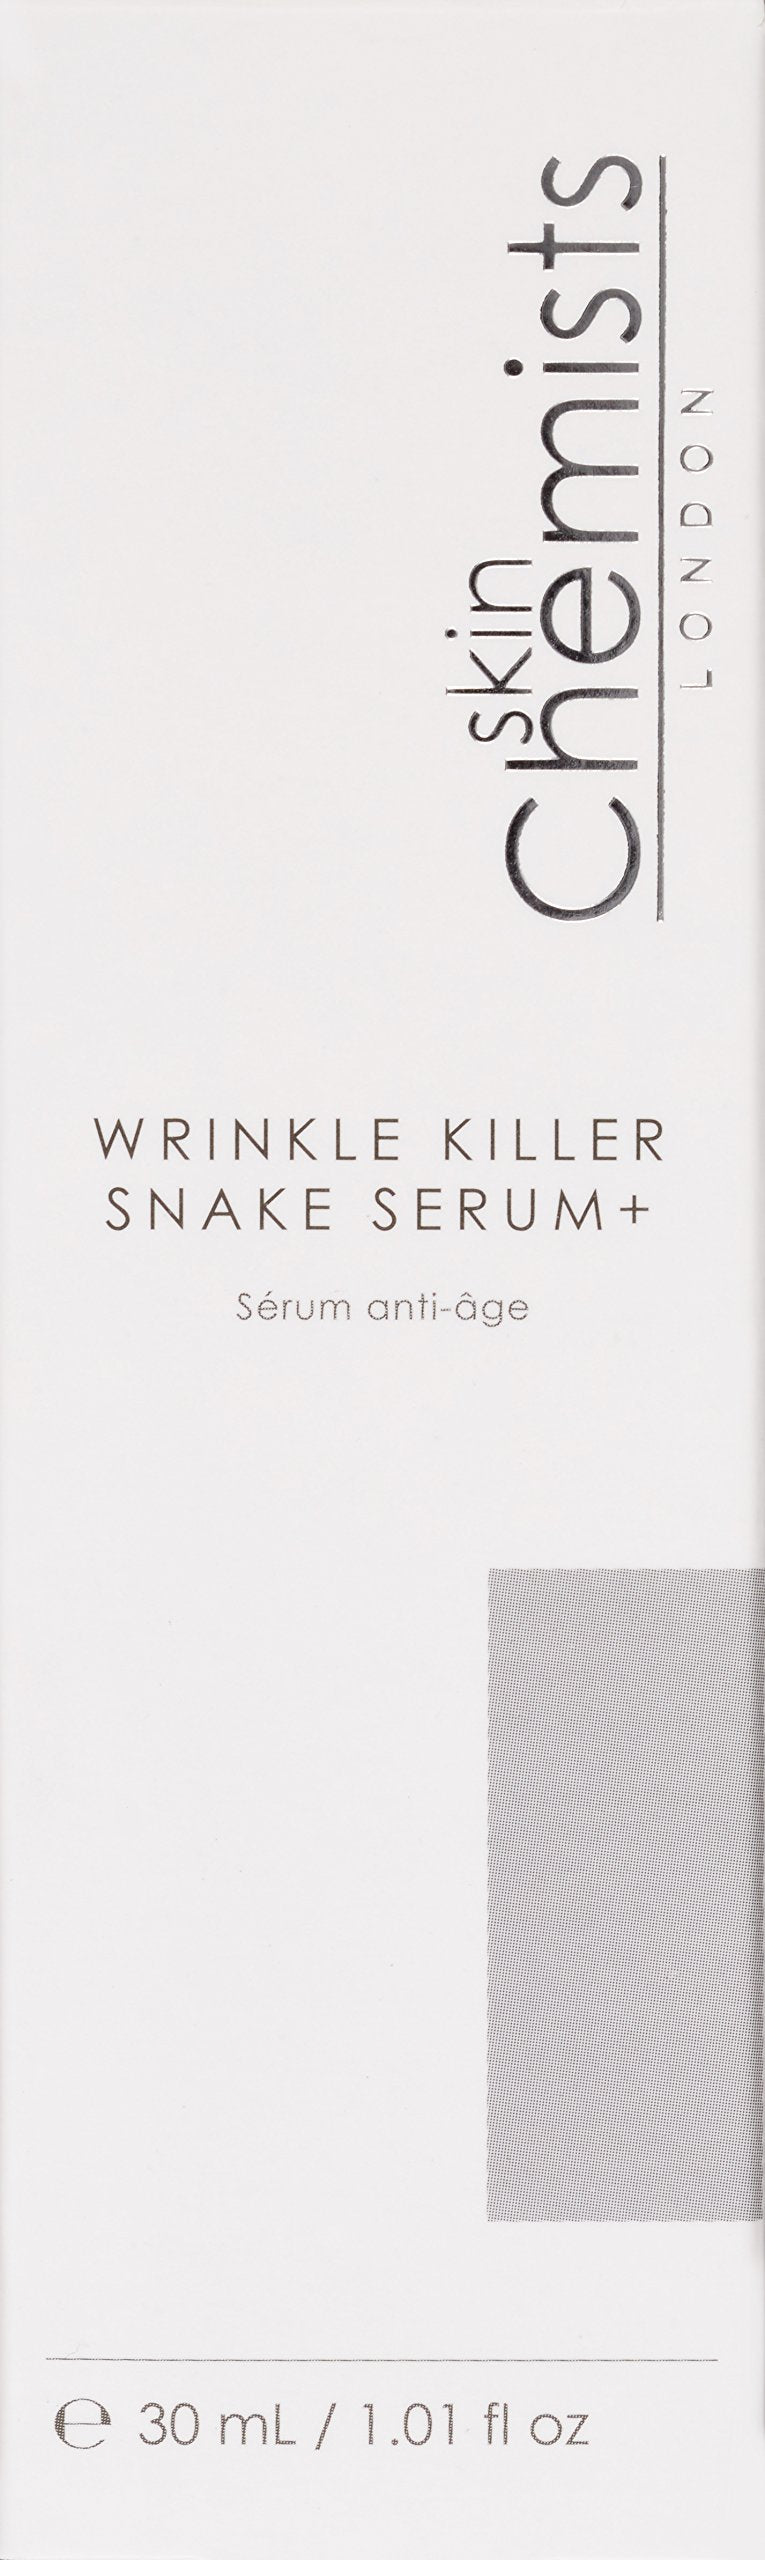 [Australia] - skinChemists Wrinkle Killer Snake Serum, 30 ml Wrinkle Killer Snake Serum + 30ml 